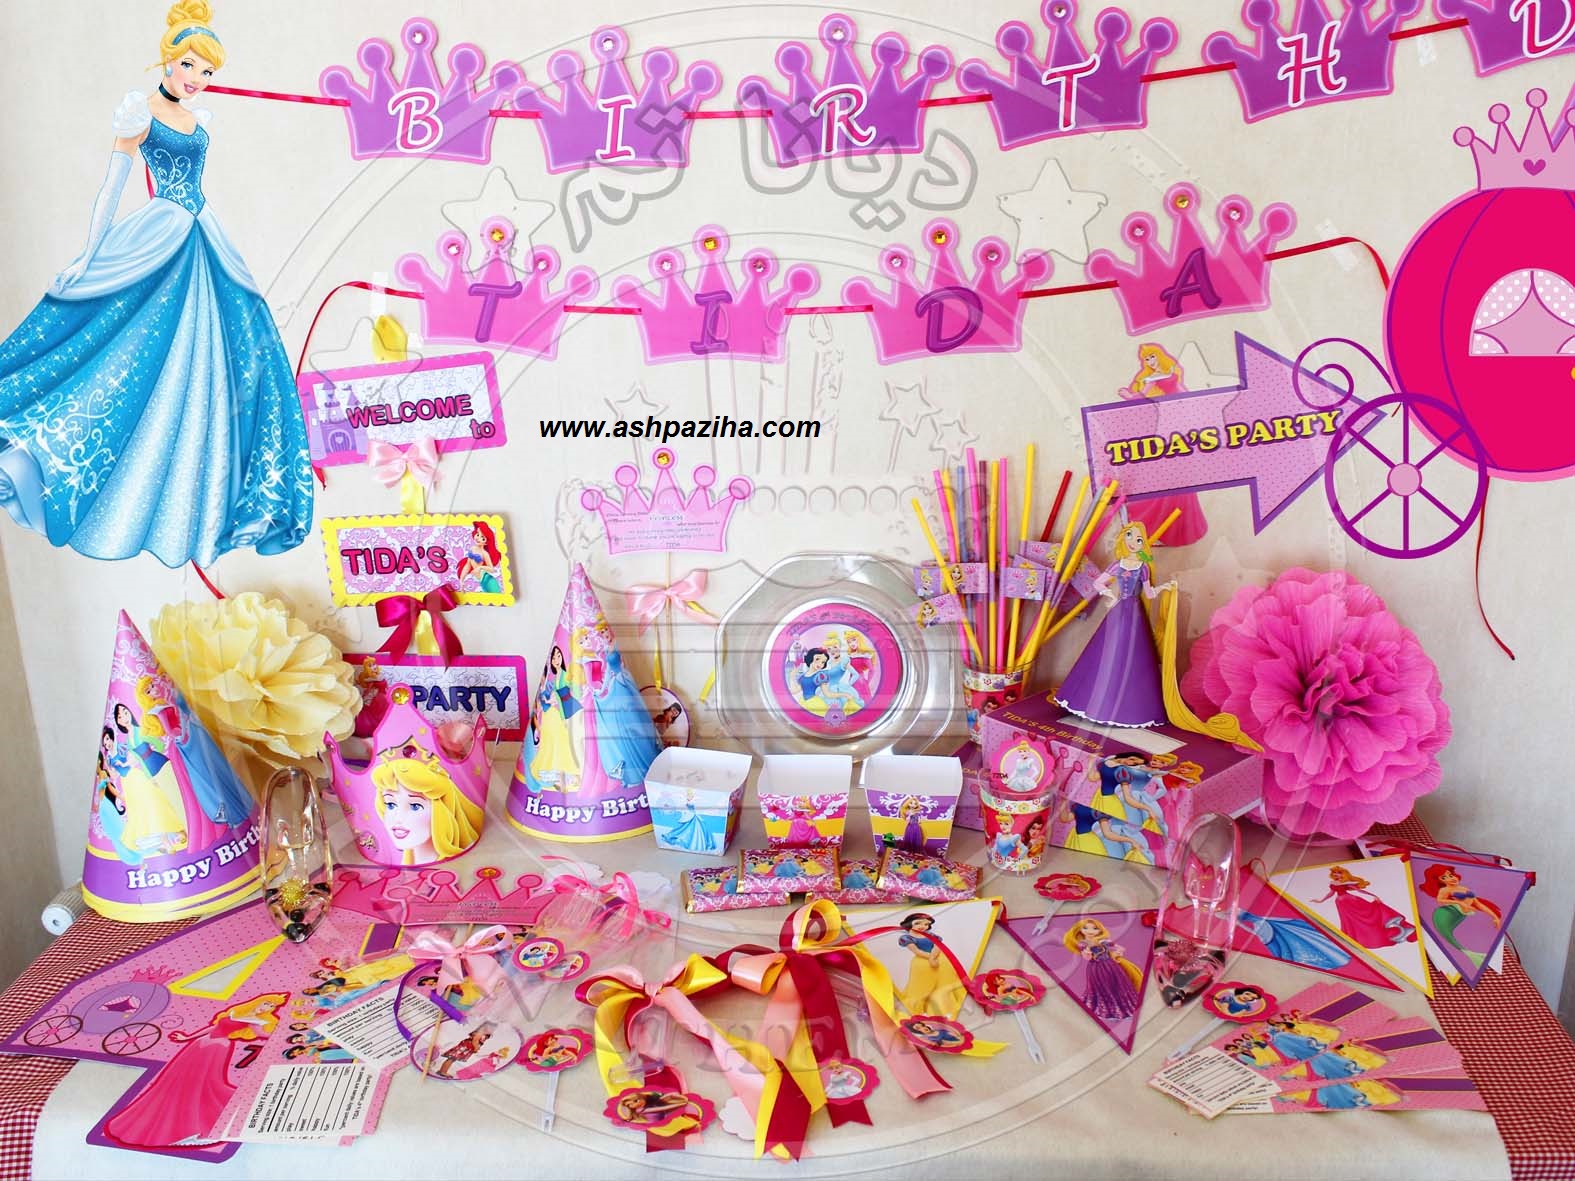 Decorations - birthday - Themes - Princess (17)